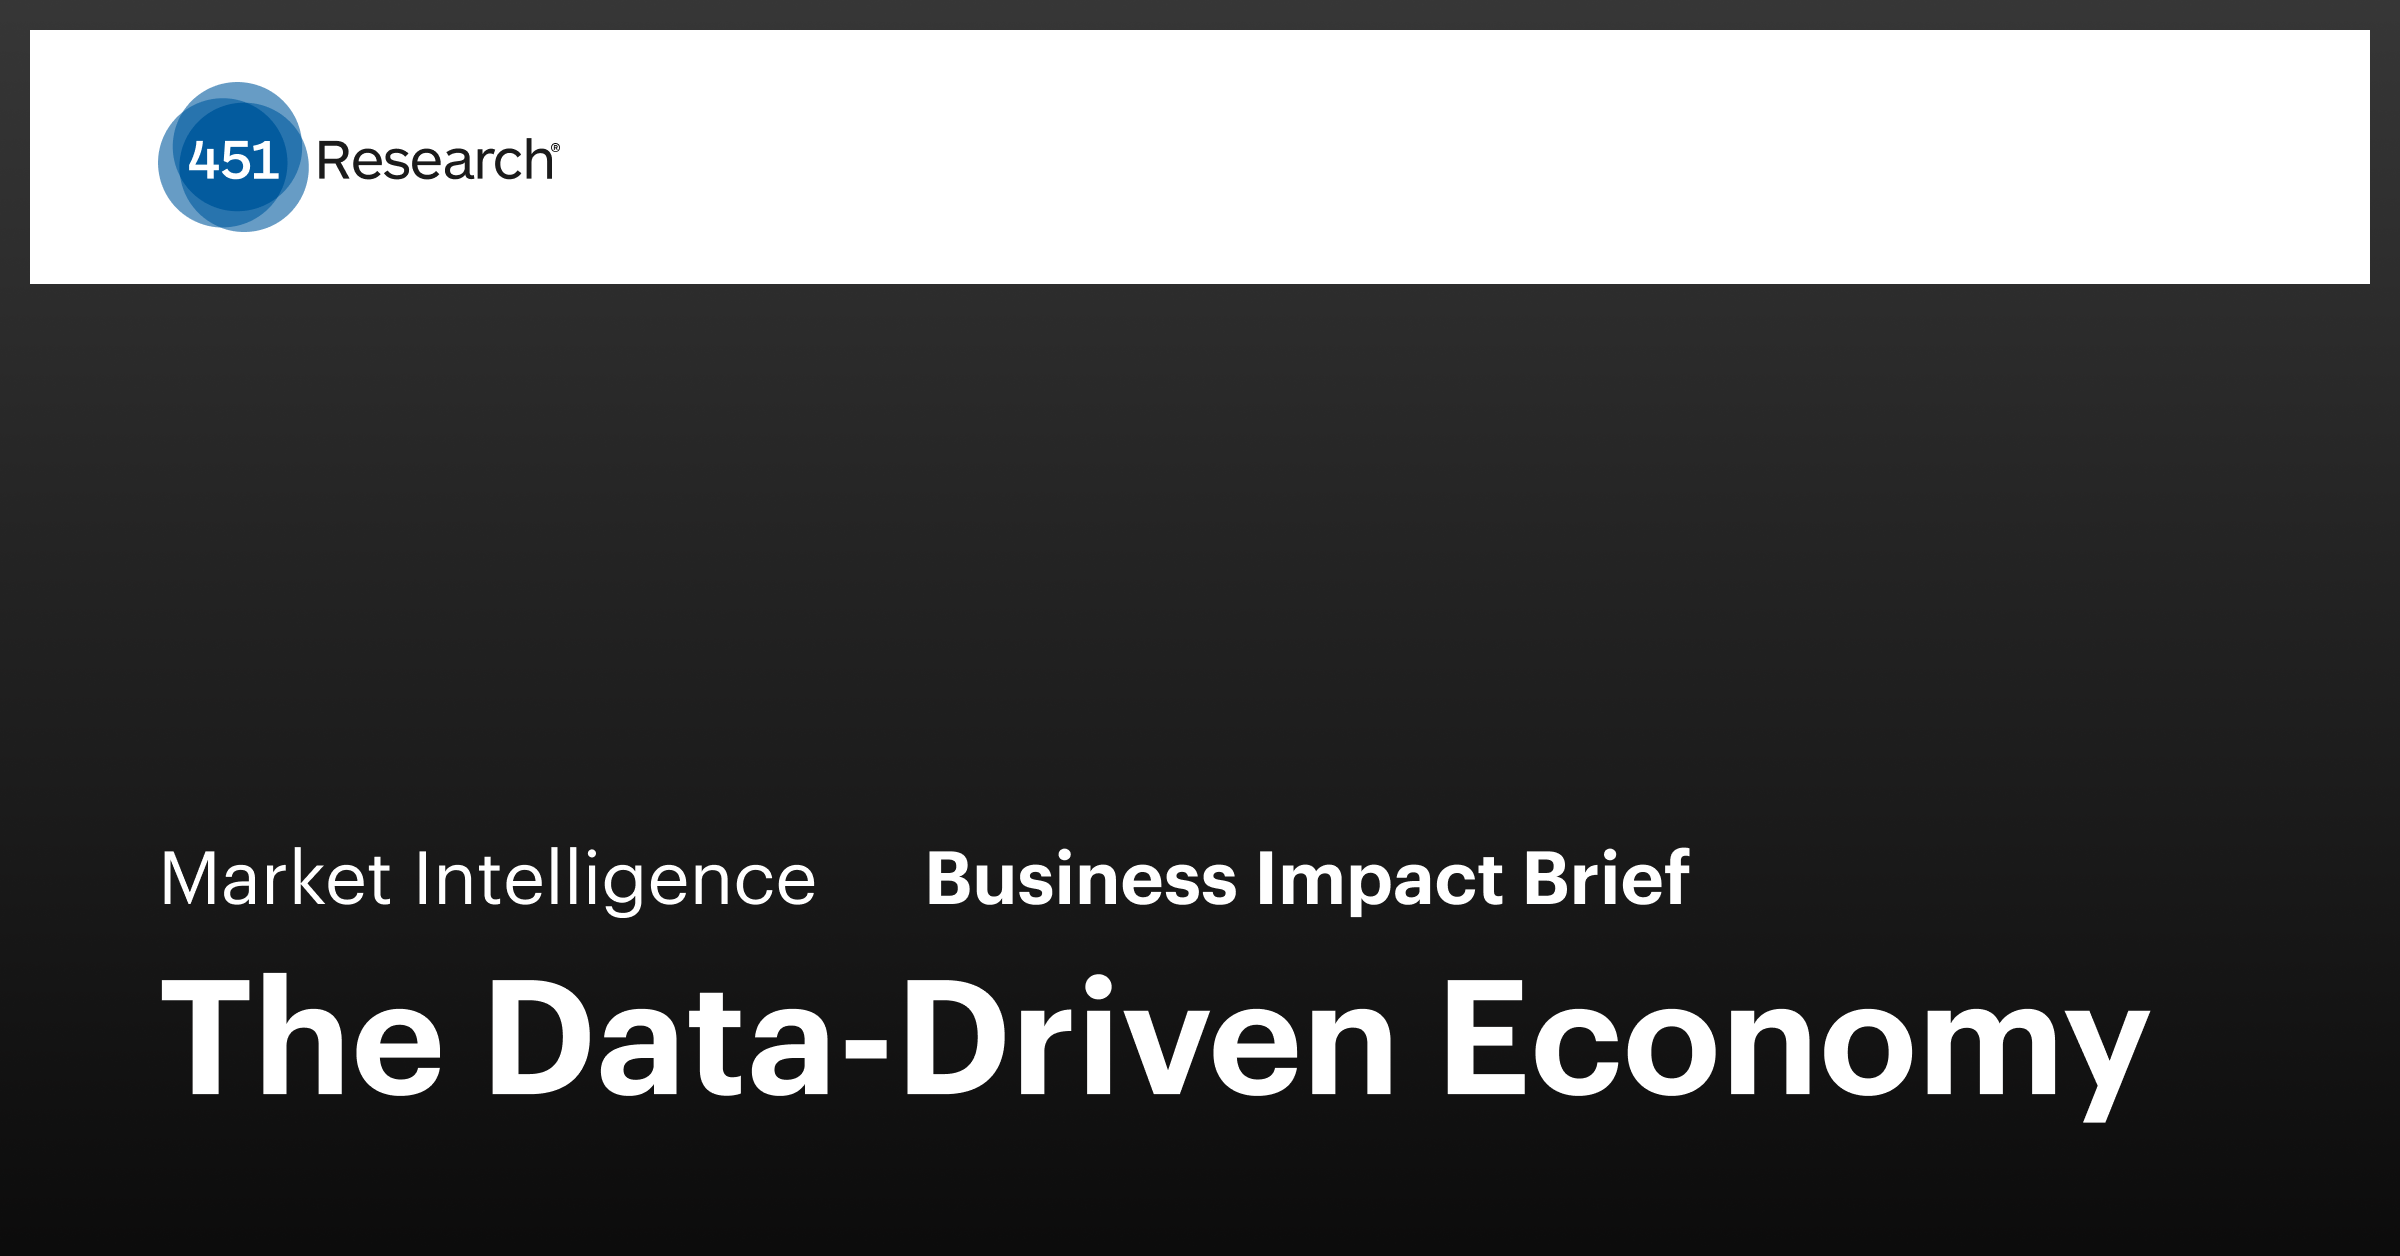 451 Research: The Data-Driven Economy